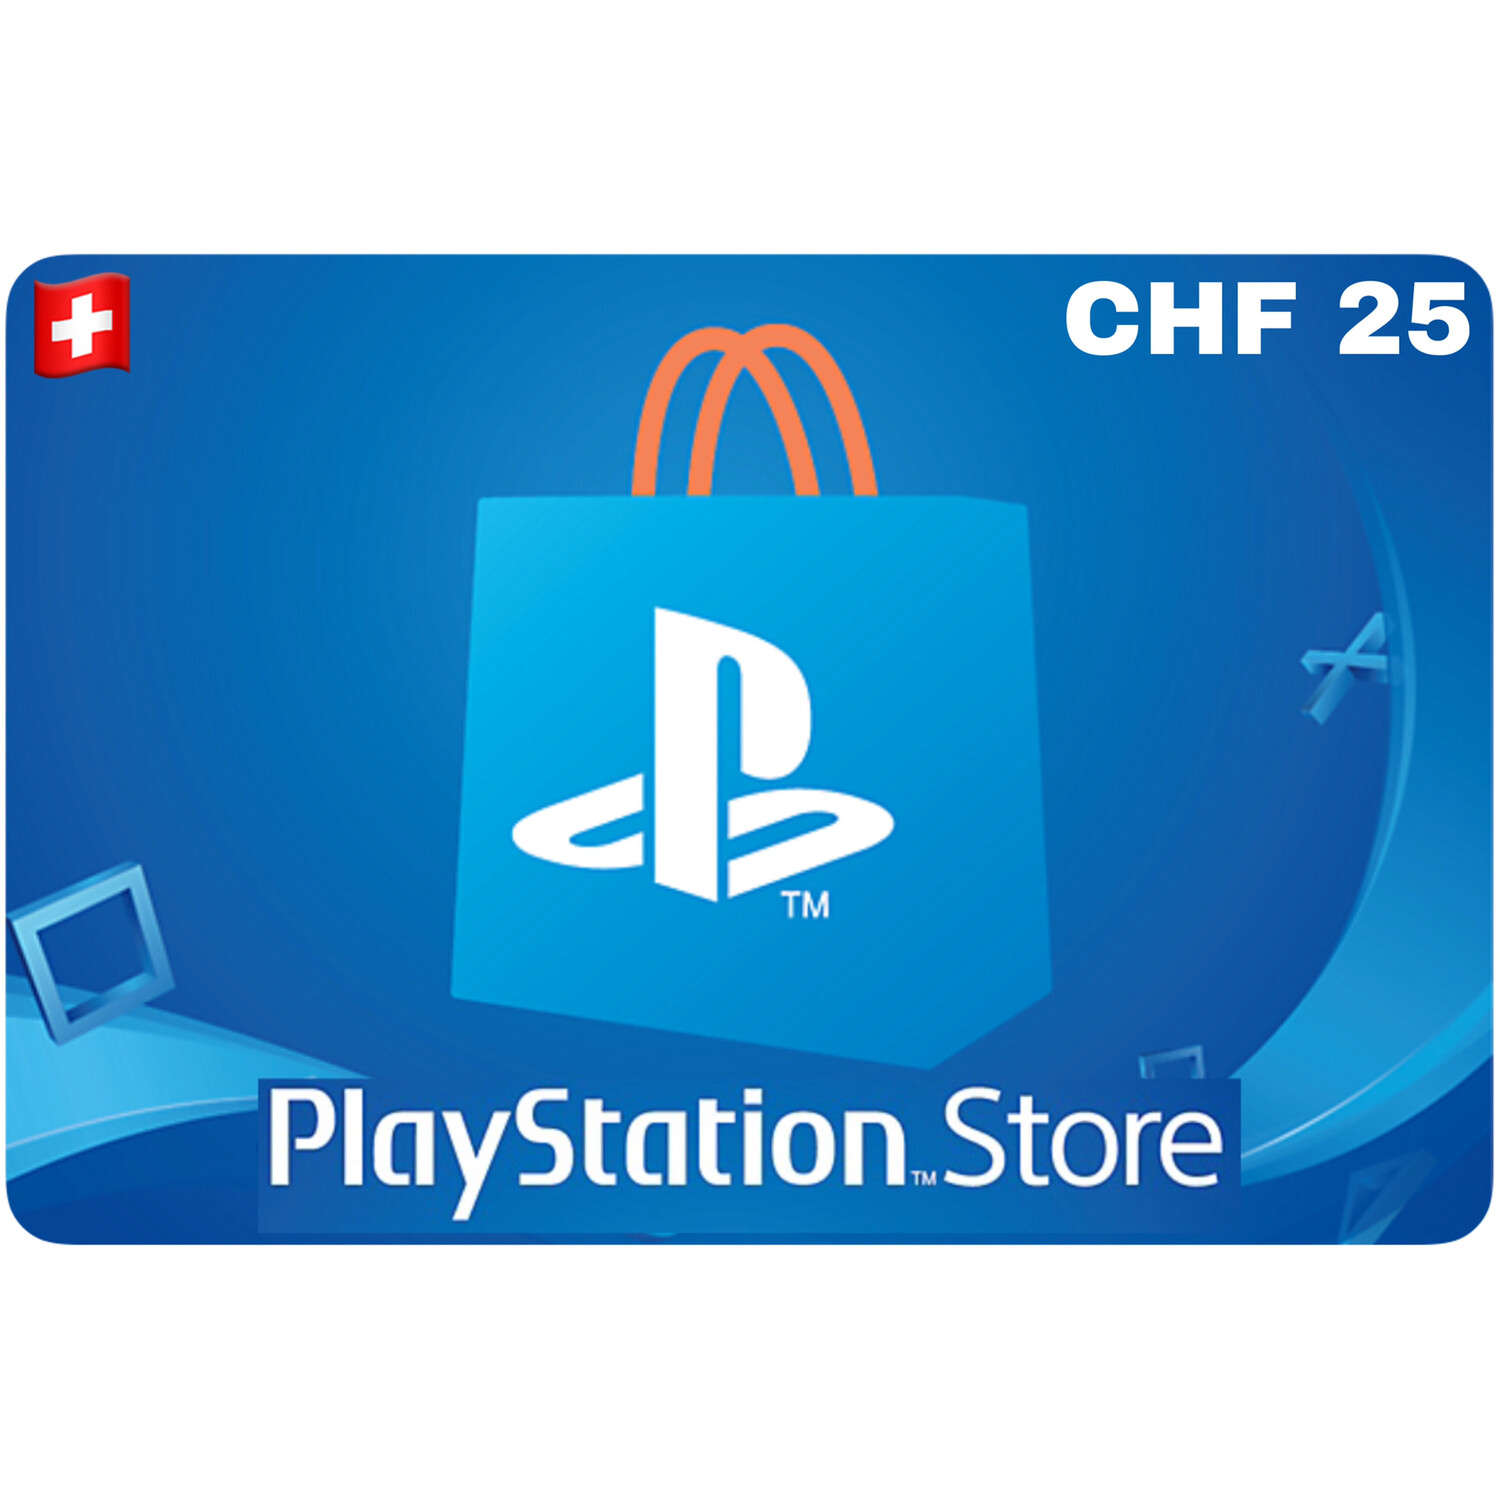 Playstation Store Gift Card Switzerland CHF 25